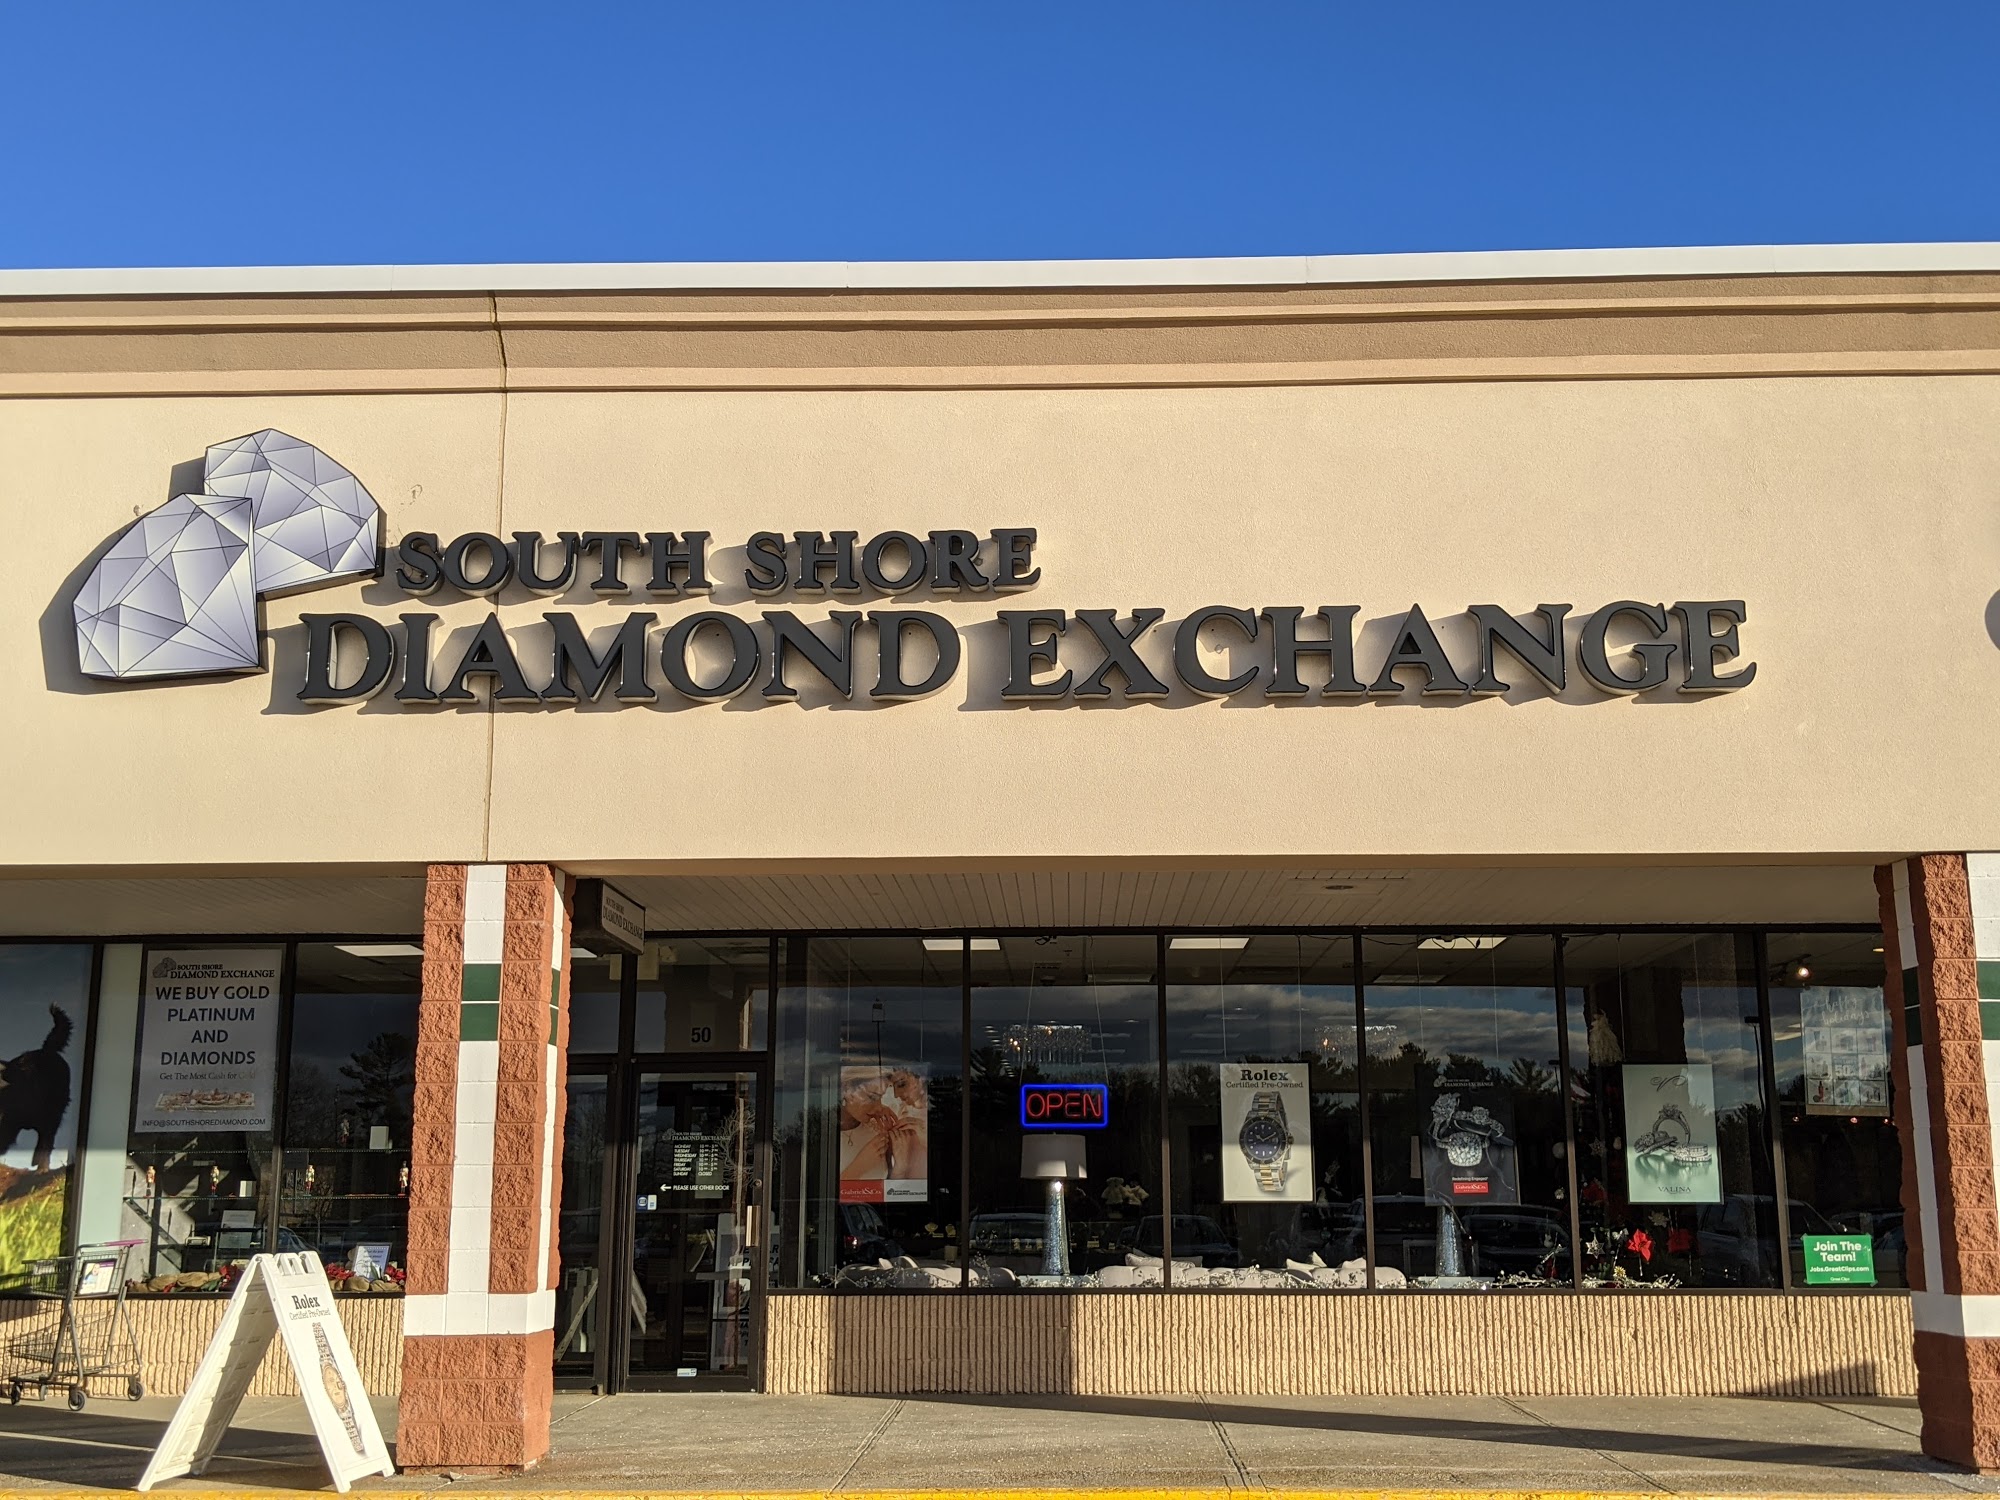 South Shore Diamond Exchange